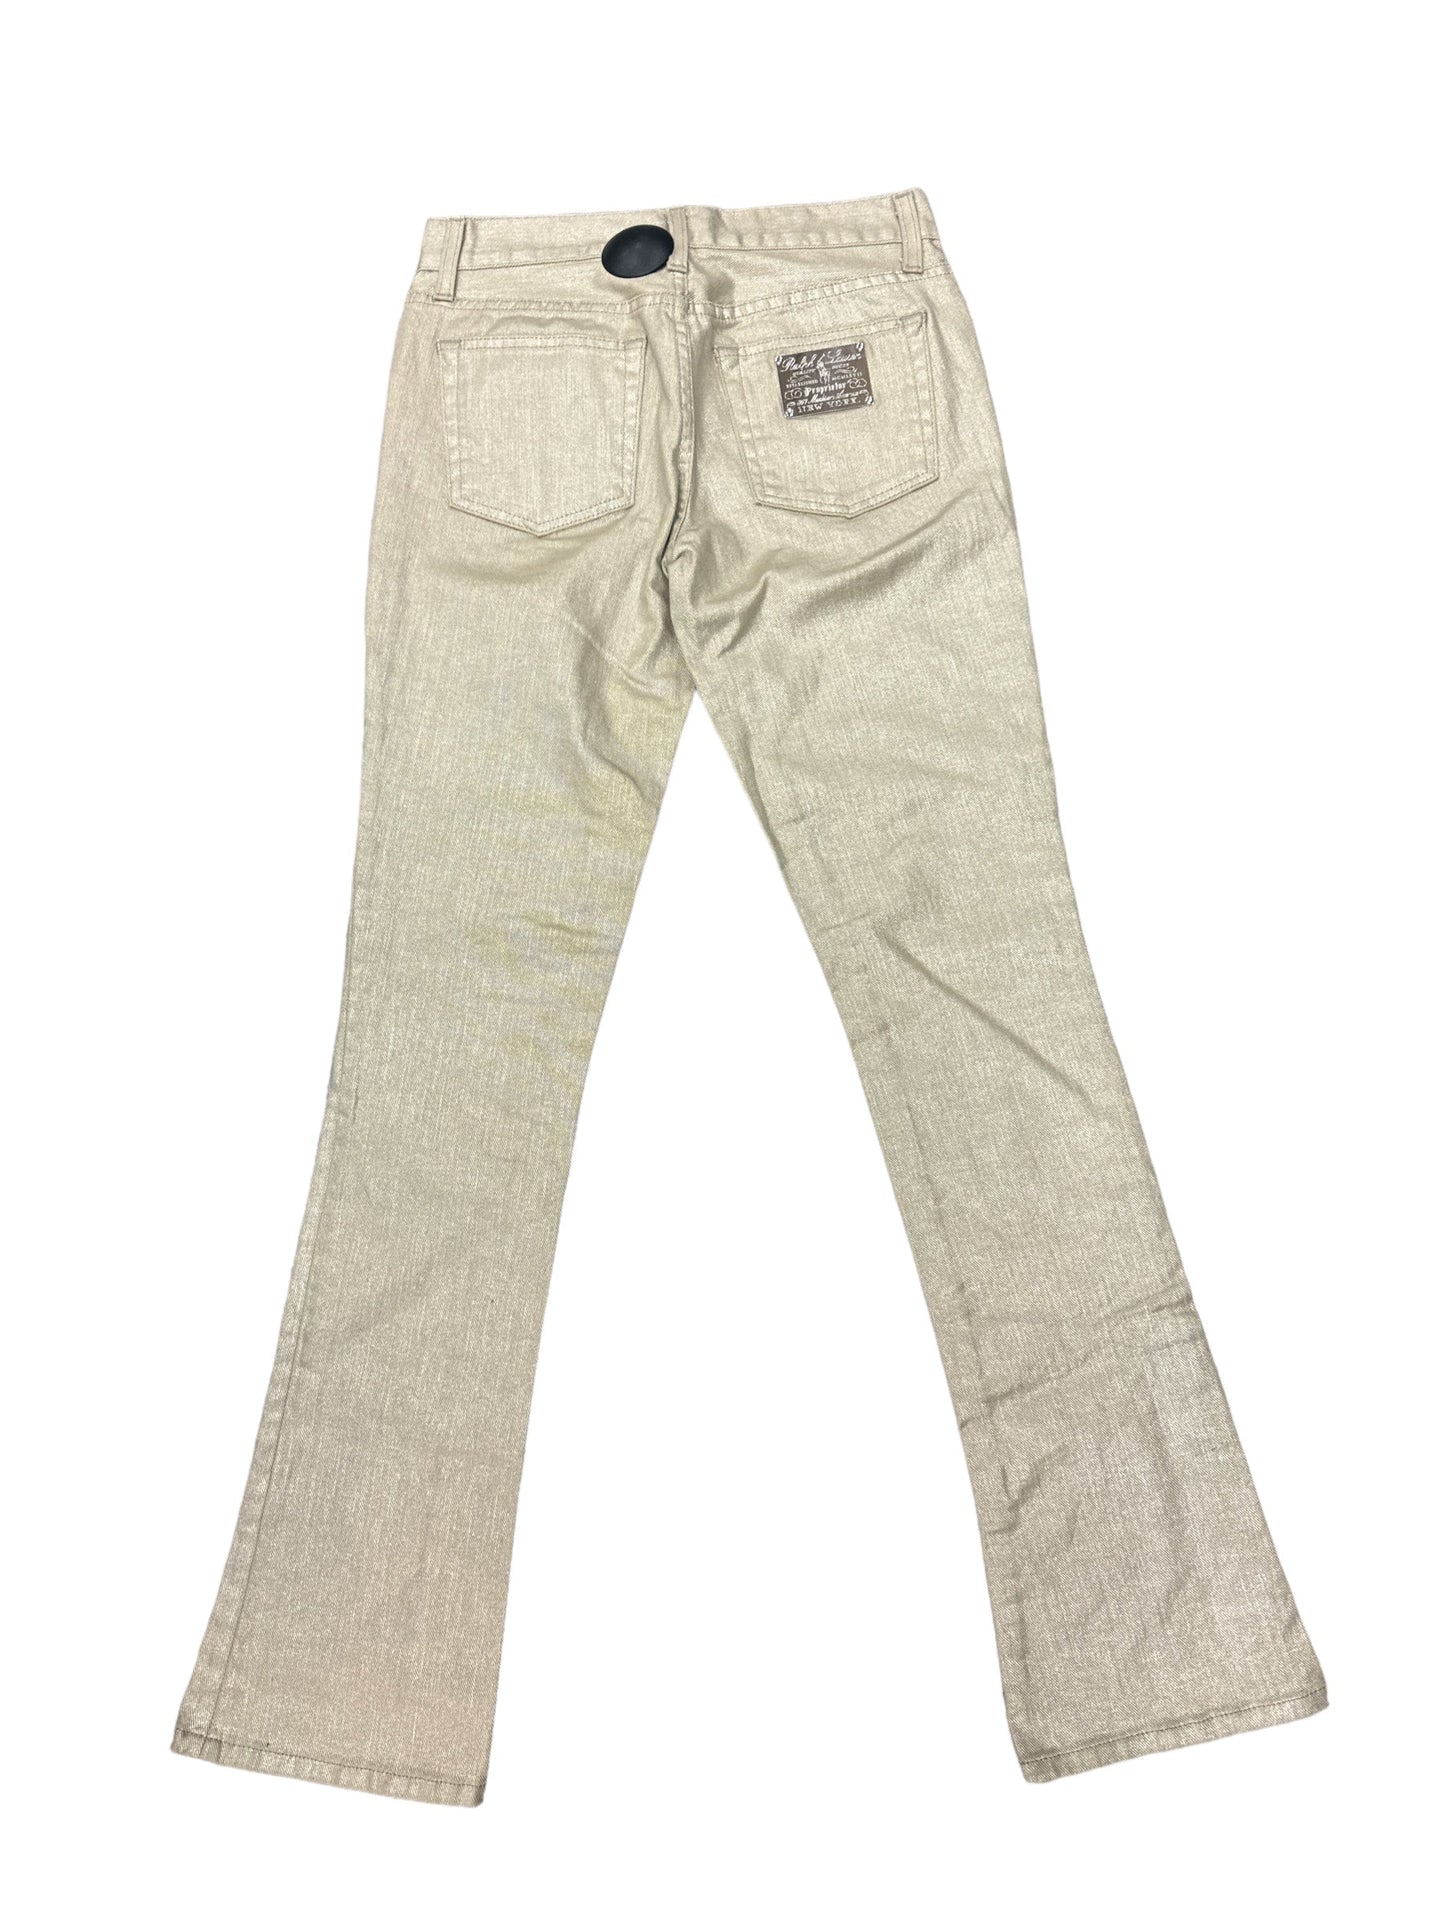 Pants Other By Ralph Lauren Black Label  Size: 4